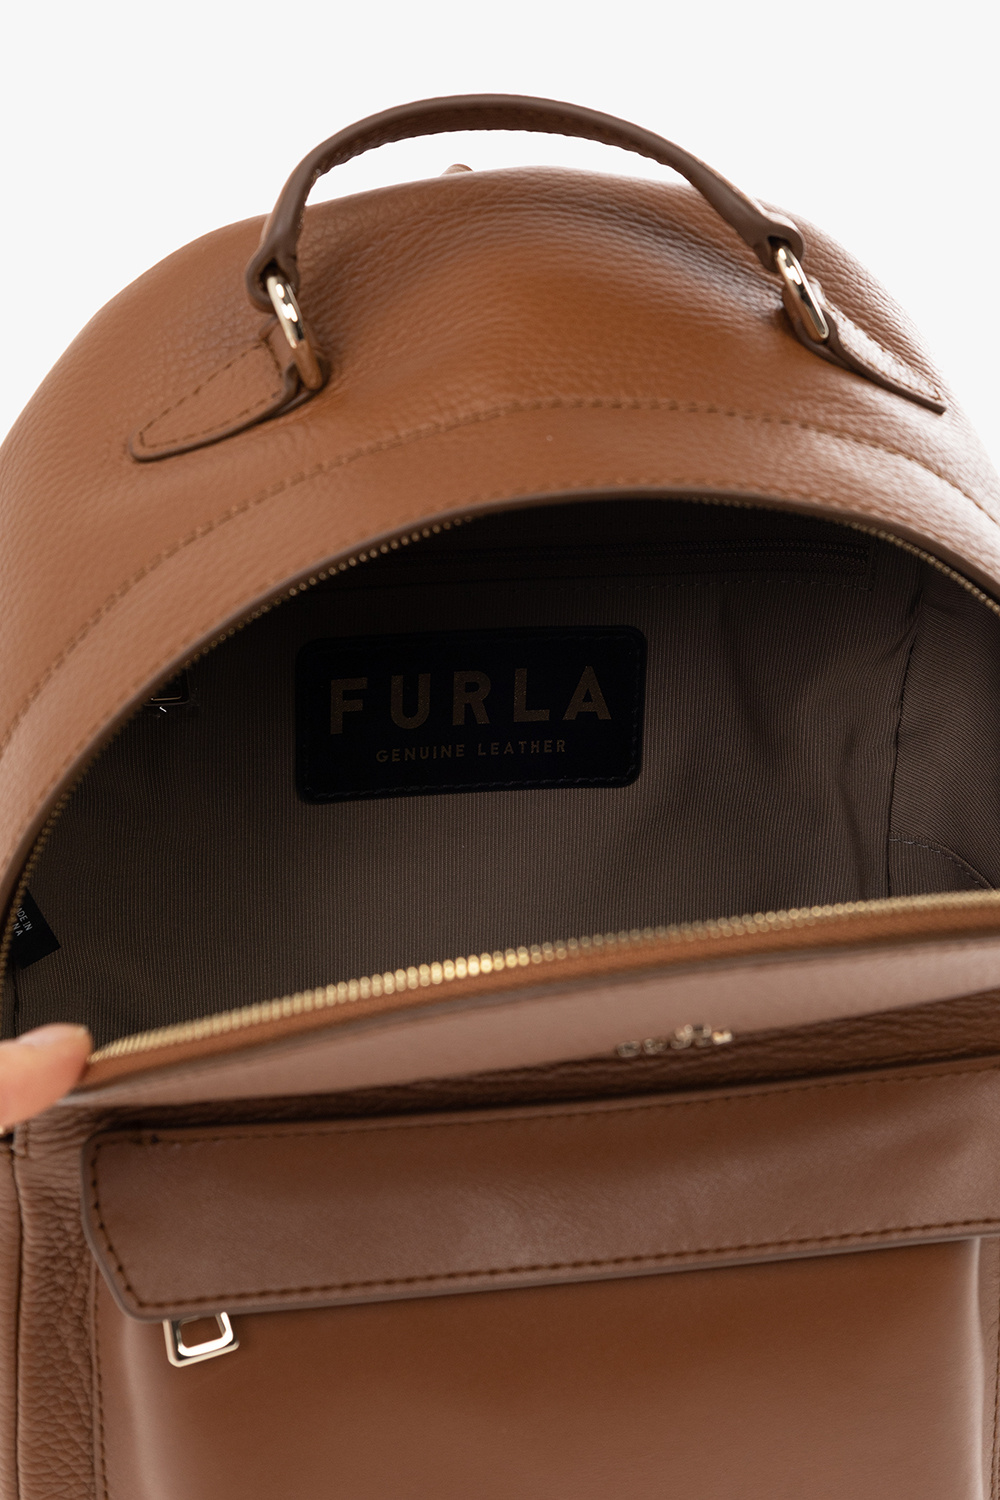 Furla ‘Favola Small’ backpack